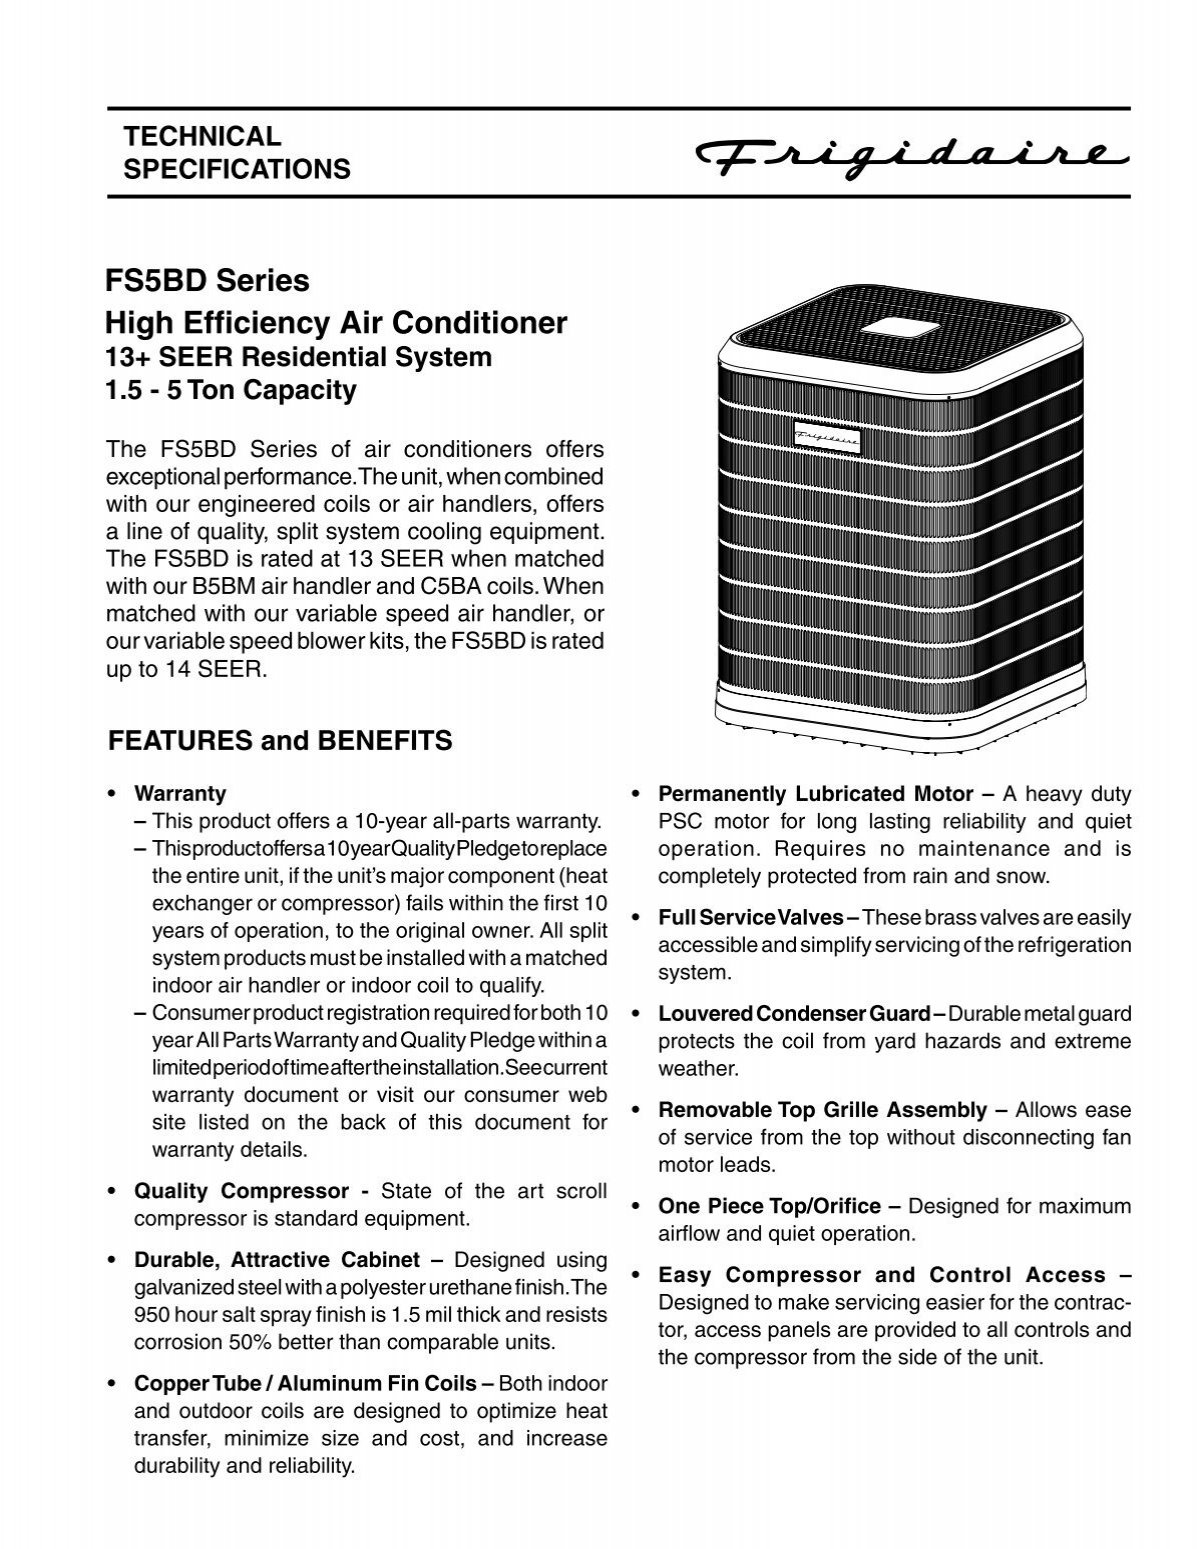 fs5bd-series-high-efficiency-air-conditioner-nordyne